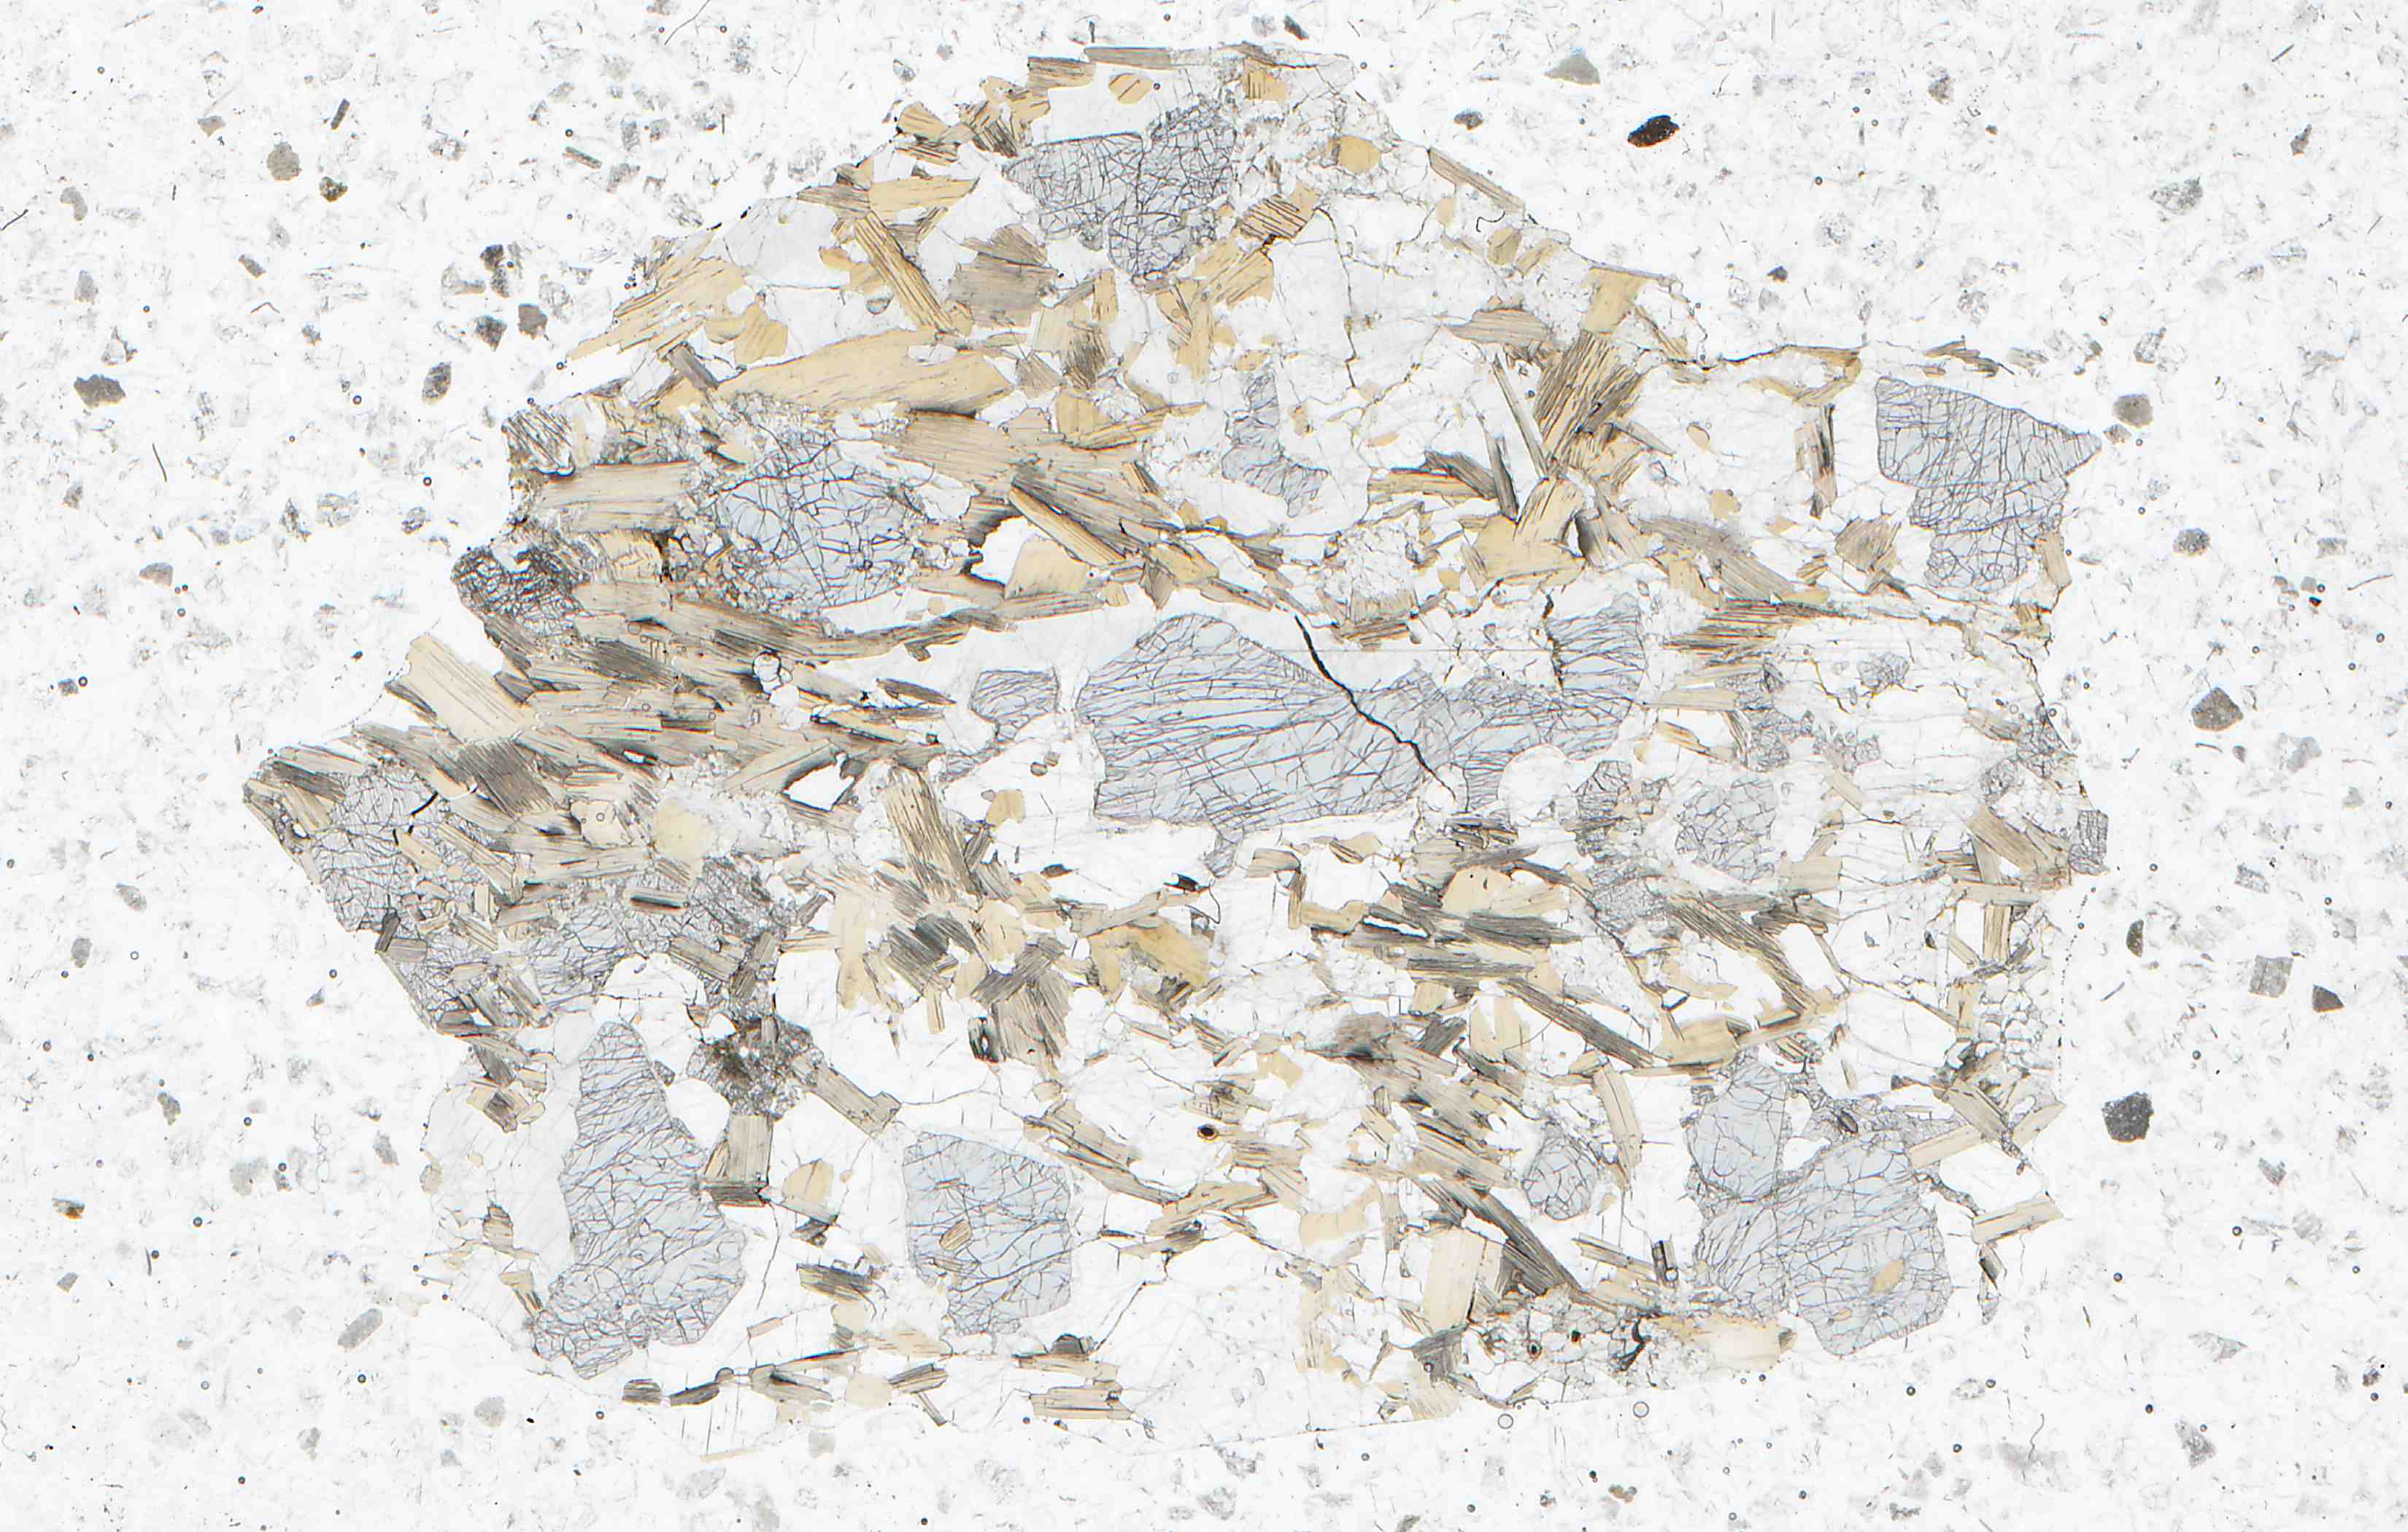 Madagascar sapphirine in thin section